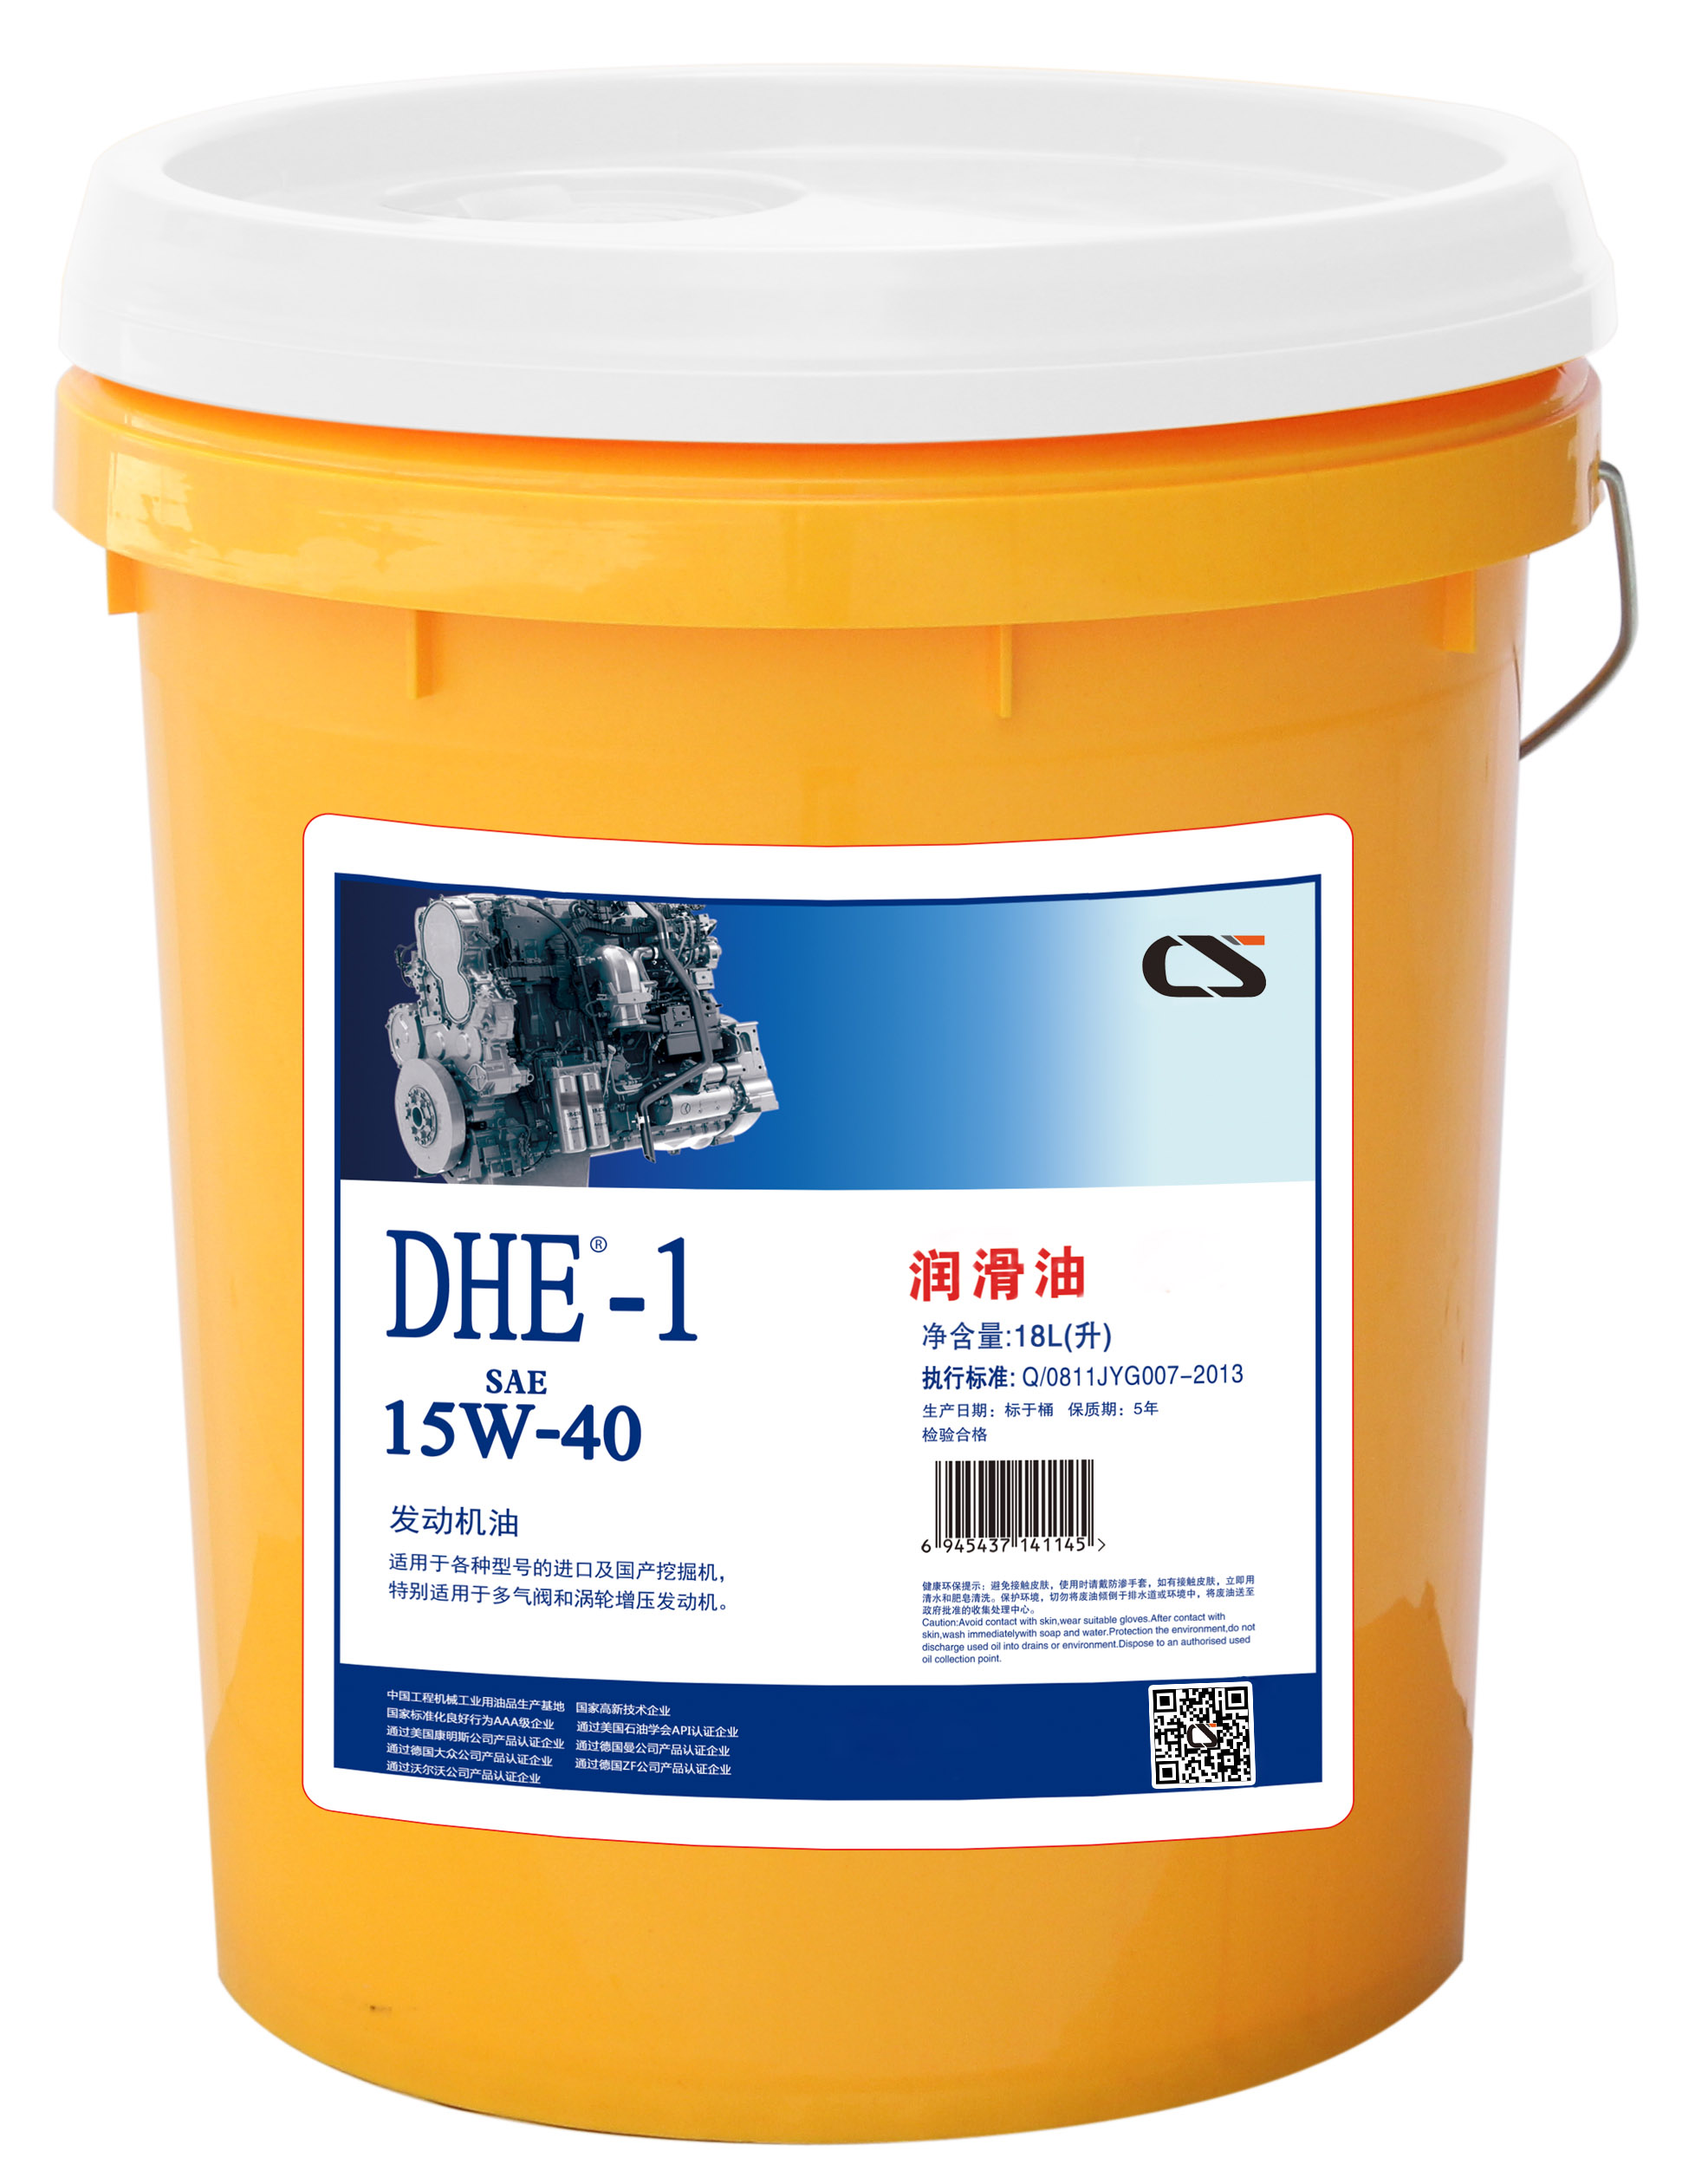 Shantui Excavator Lubricating Oils engine oil DHE-1 SAE 15W-40